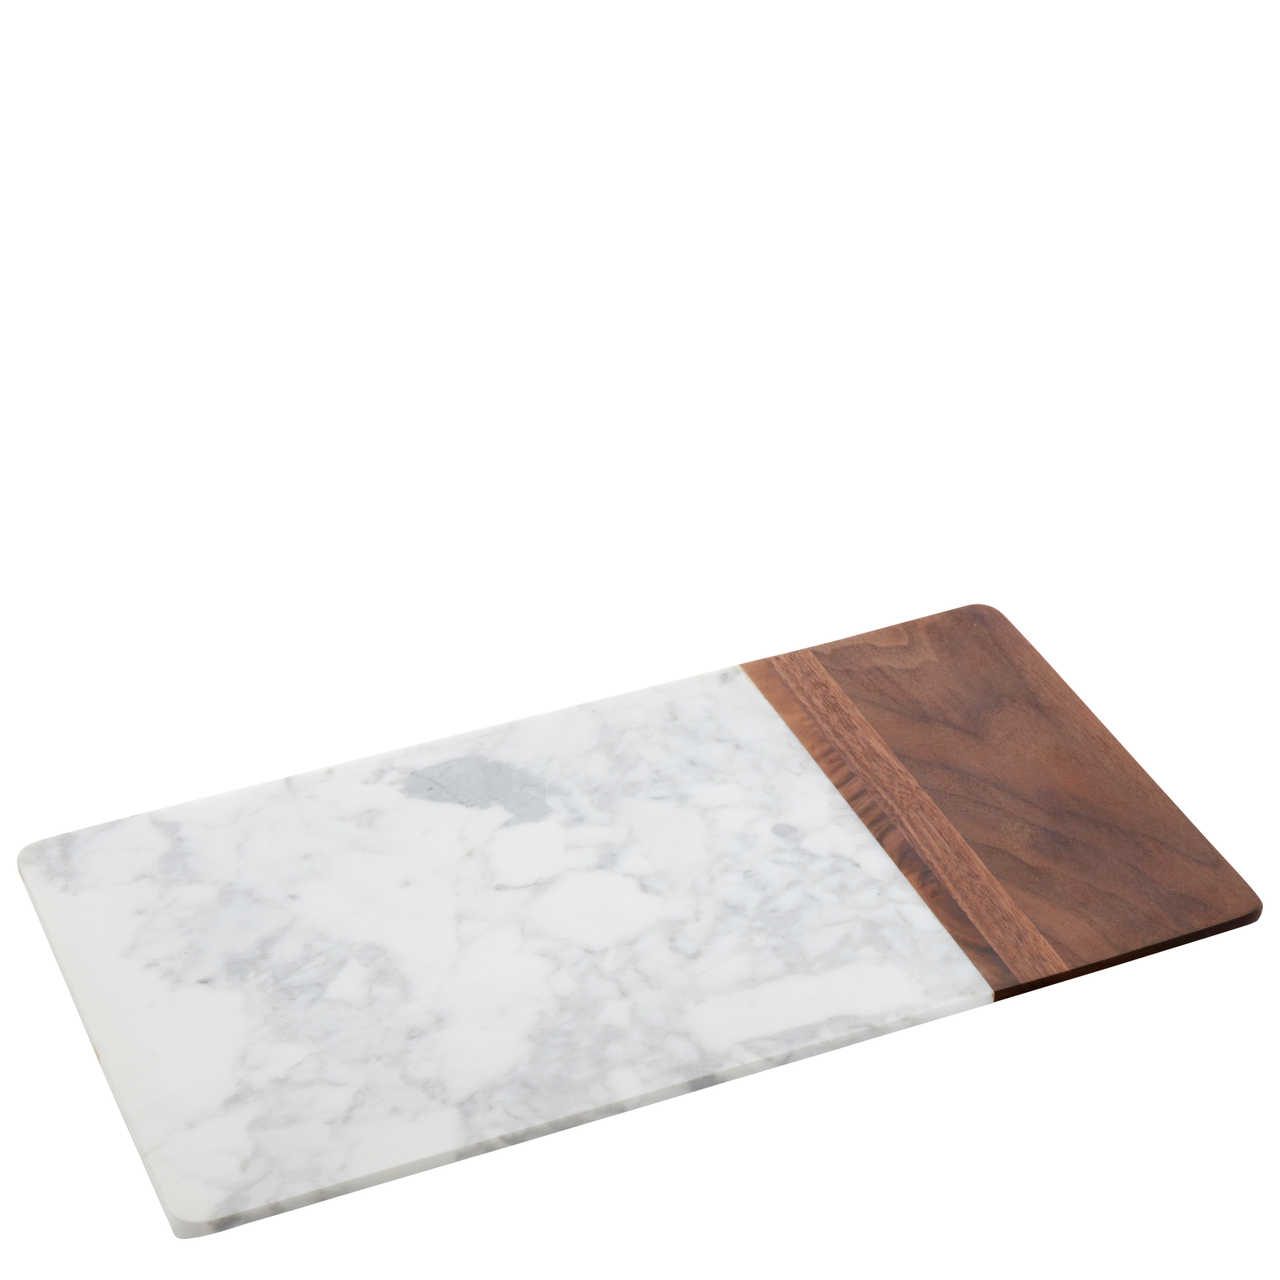 Board marble/wood rectangular 38.1x20x1,